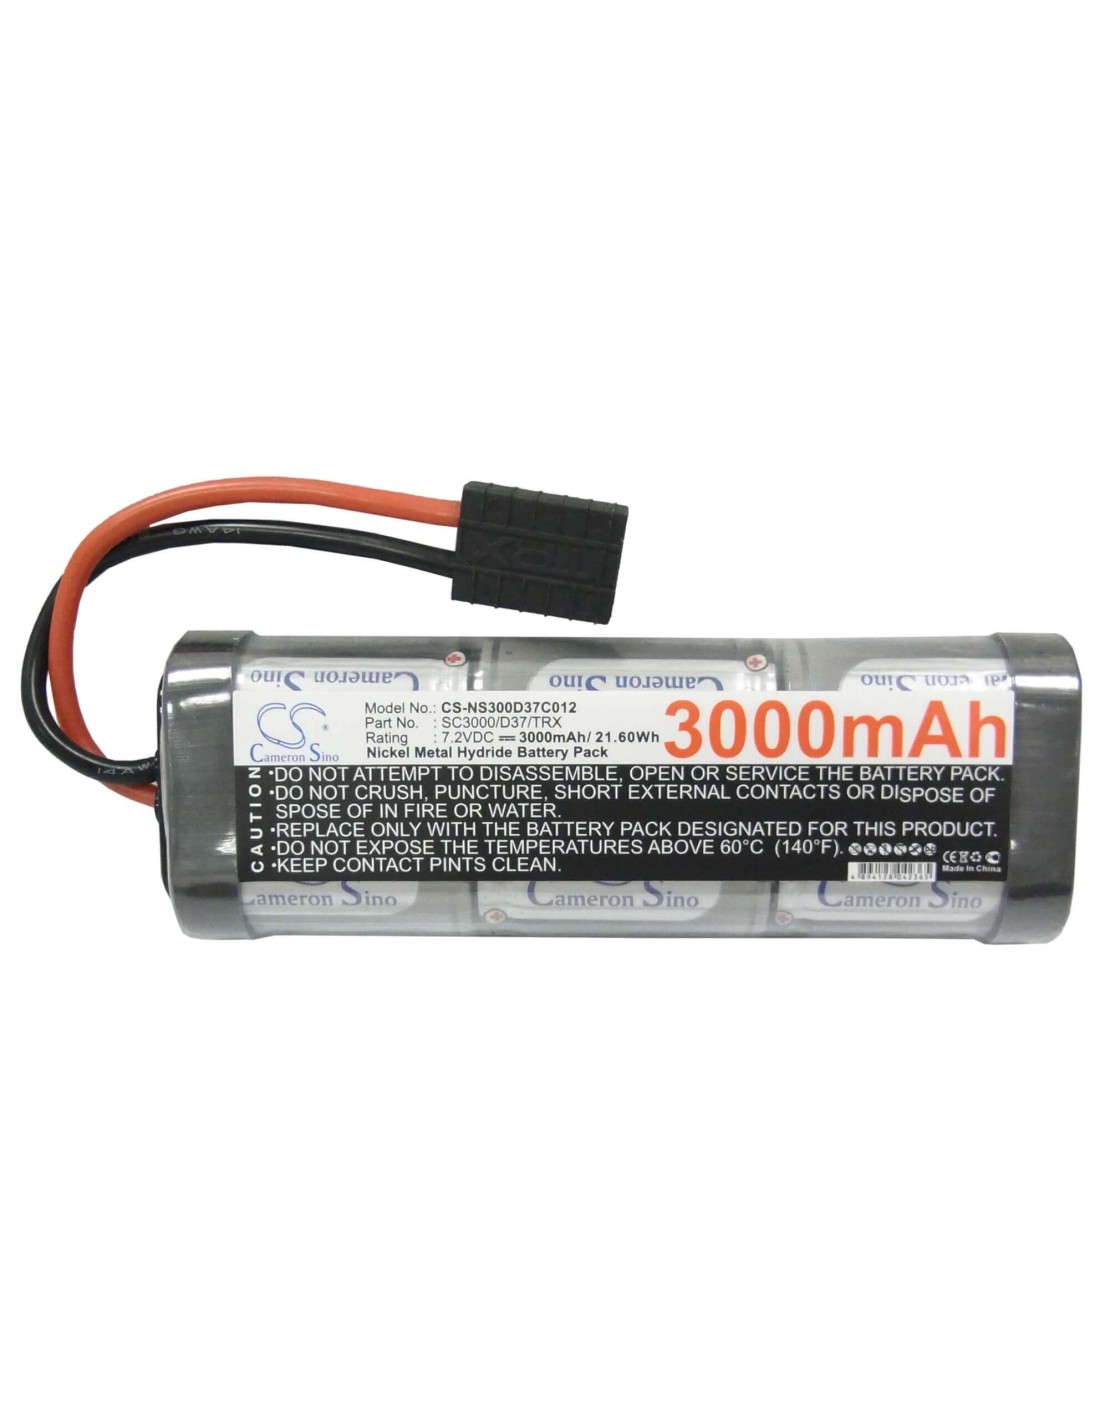 7.2V, Ni-MH, 3000mAh, Battery fits Cameron Sino, Cs-ns300d37c012, 21.6Wh